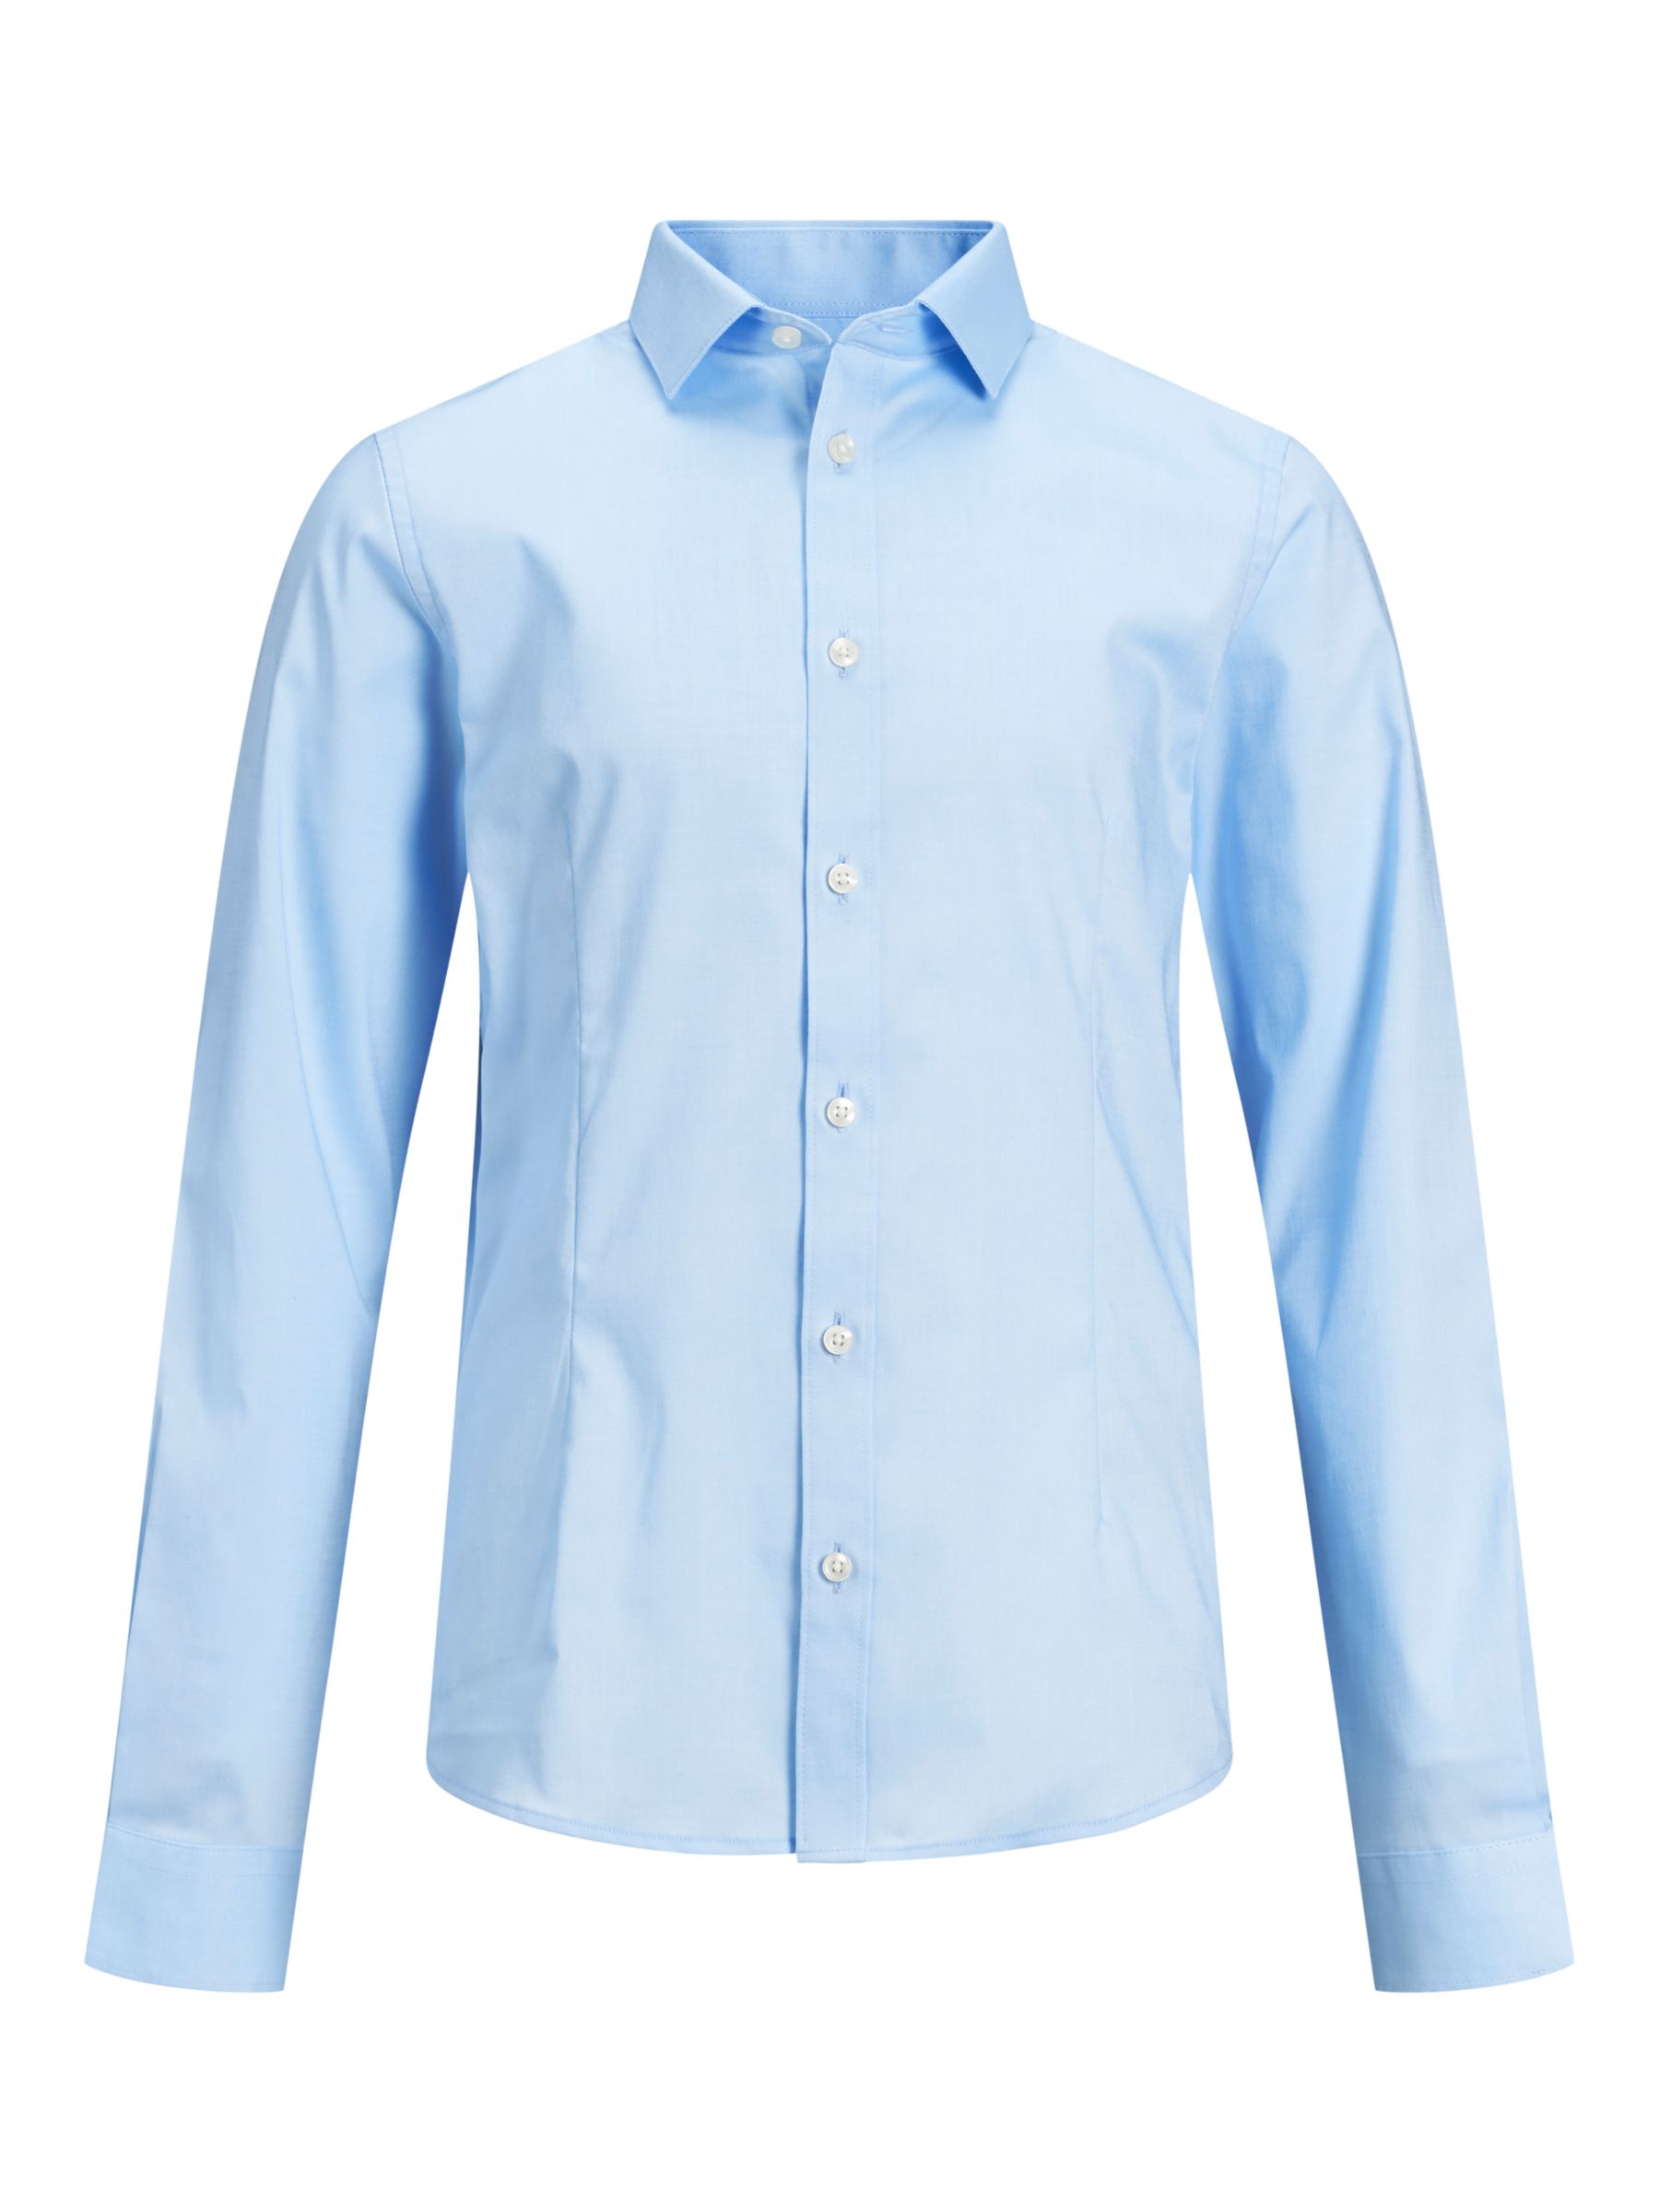 Jack & Jones Junior Solid Formal Shirt, Light Blue at John Lewis & Partners